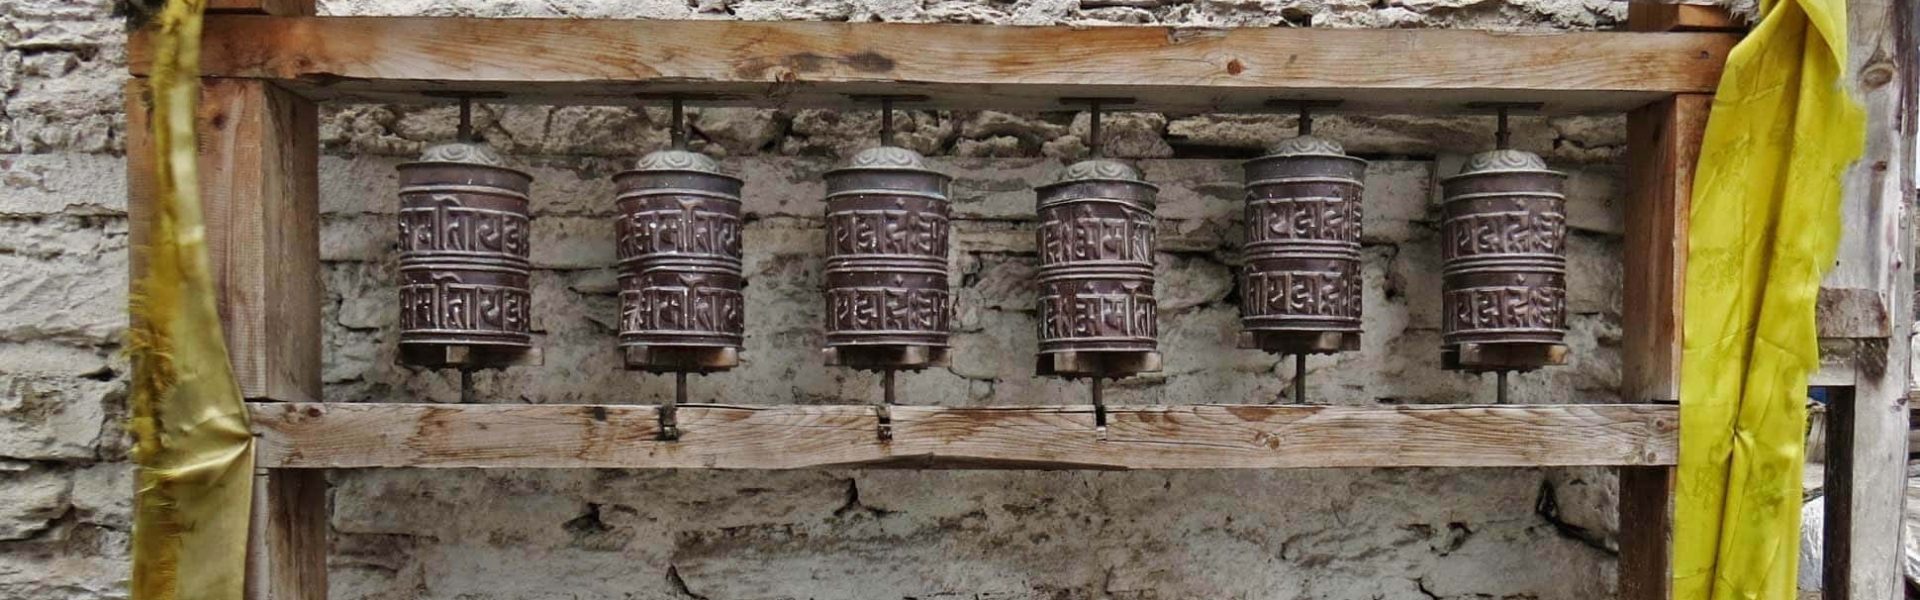 Detalle de templo en Nepal